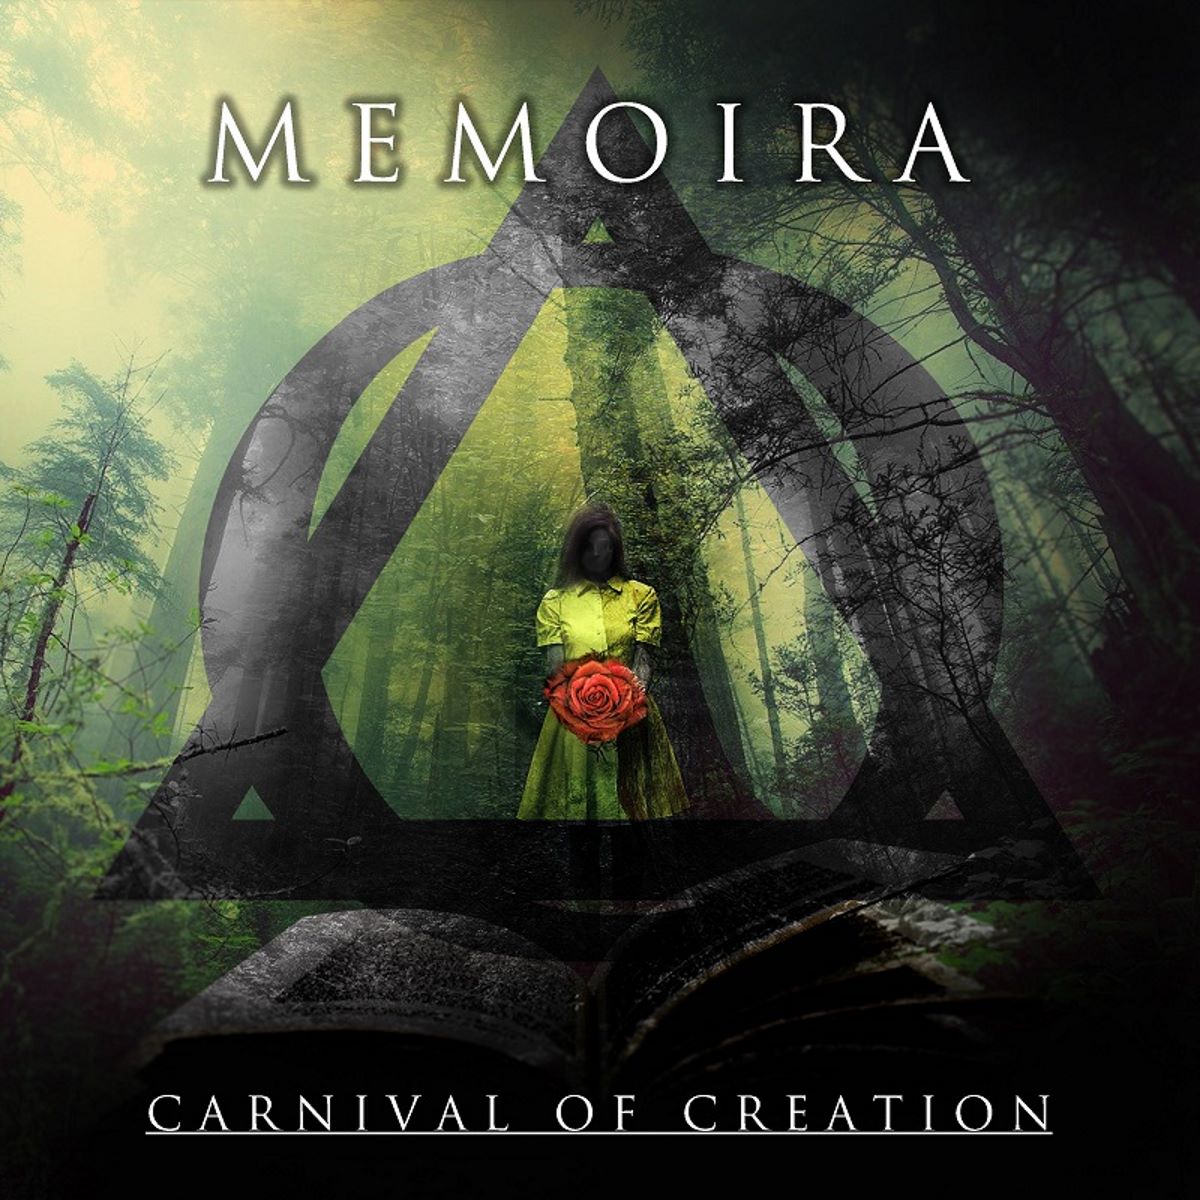 memoira - carnival of creation - album cover